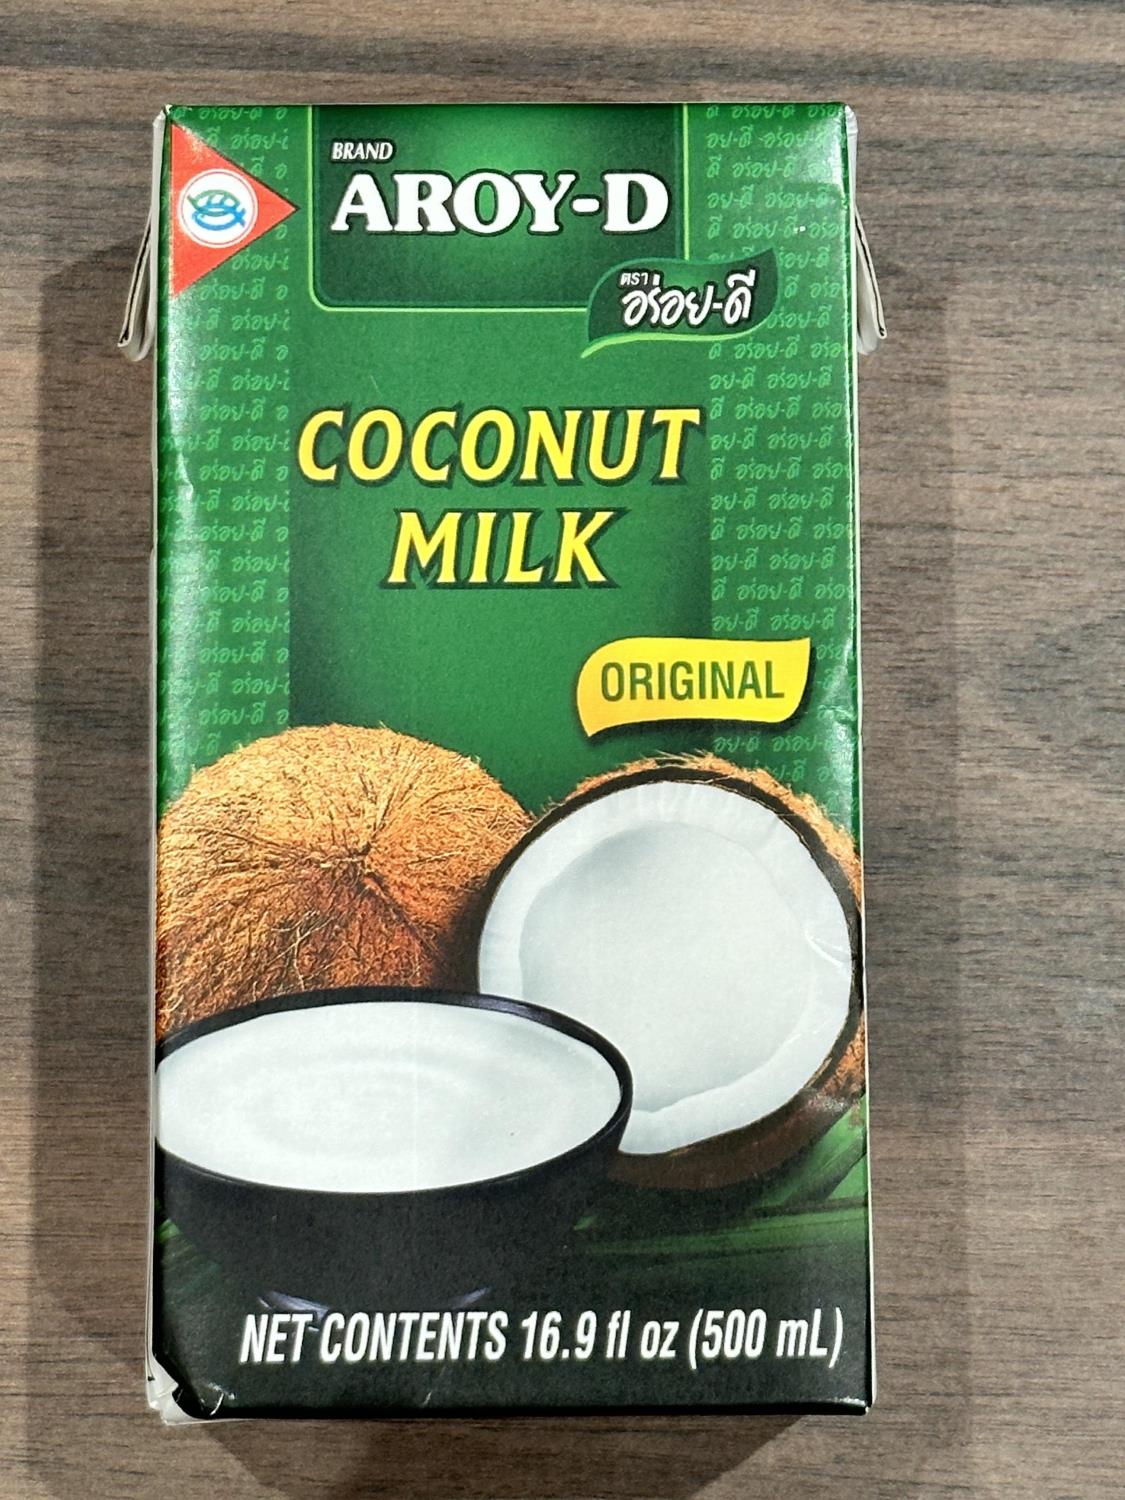 Aroy-D coconut milk